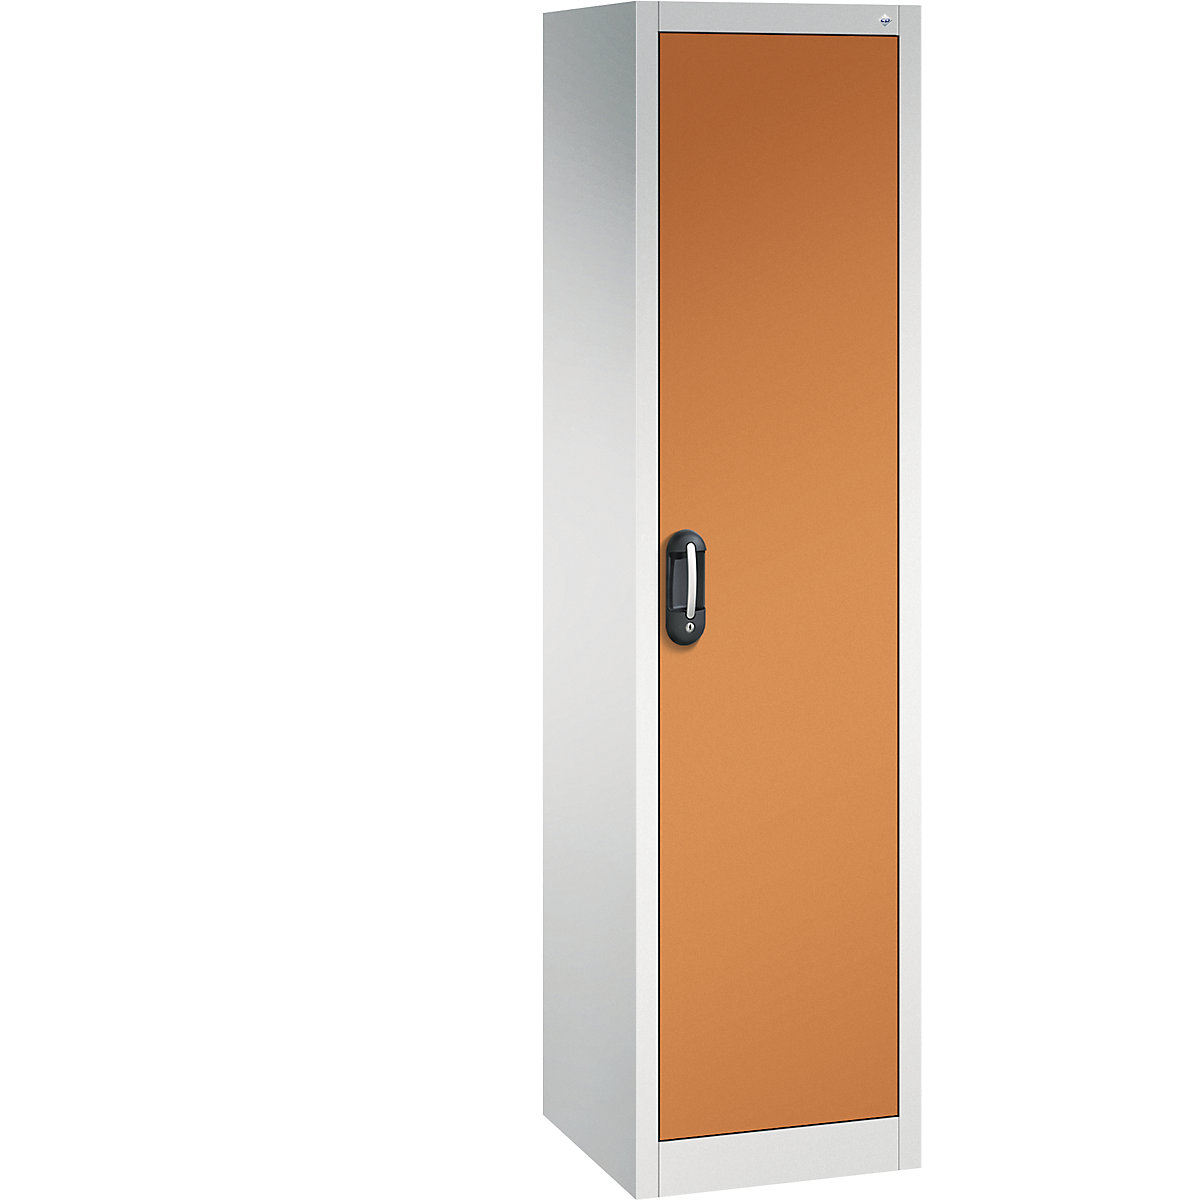 C+P – ACURADO universal cupboard, WxD 500 x 500 mm, light grey / yellow orange